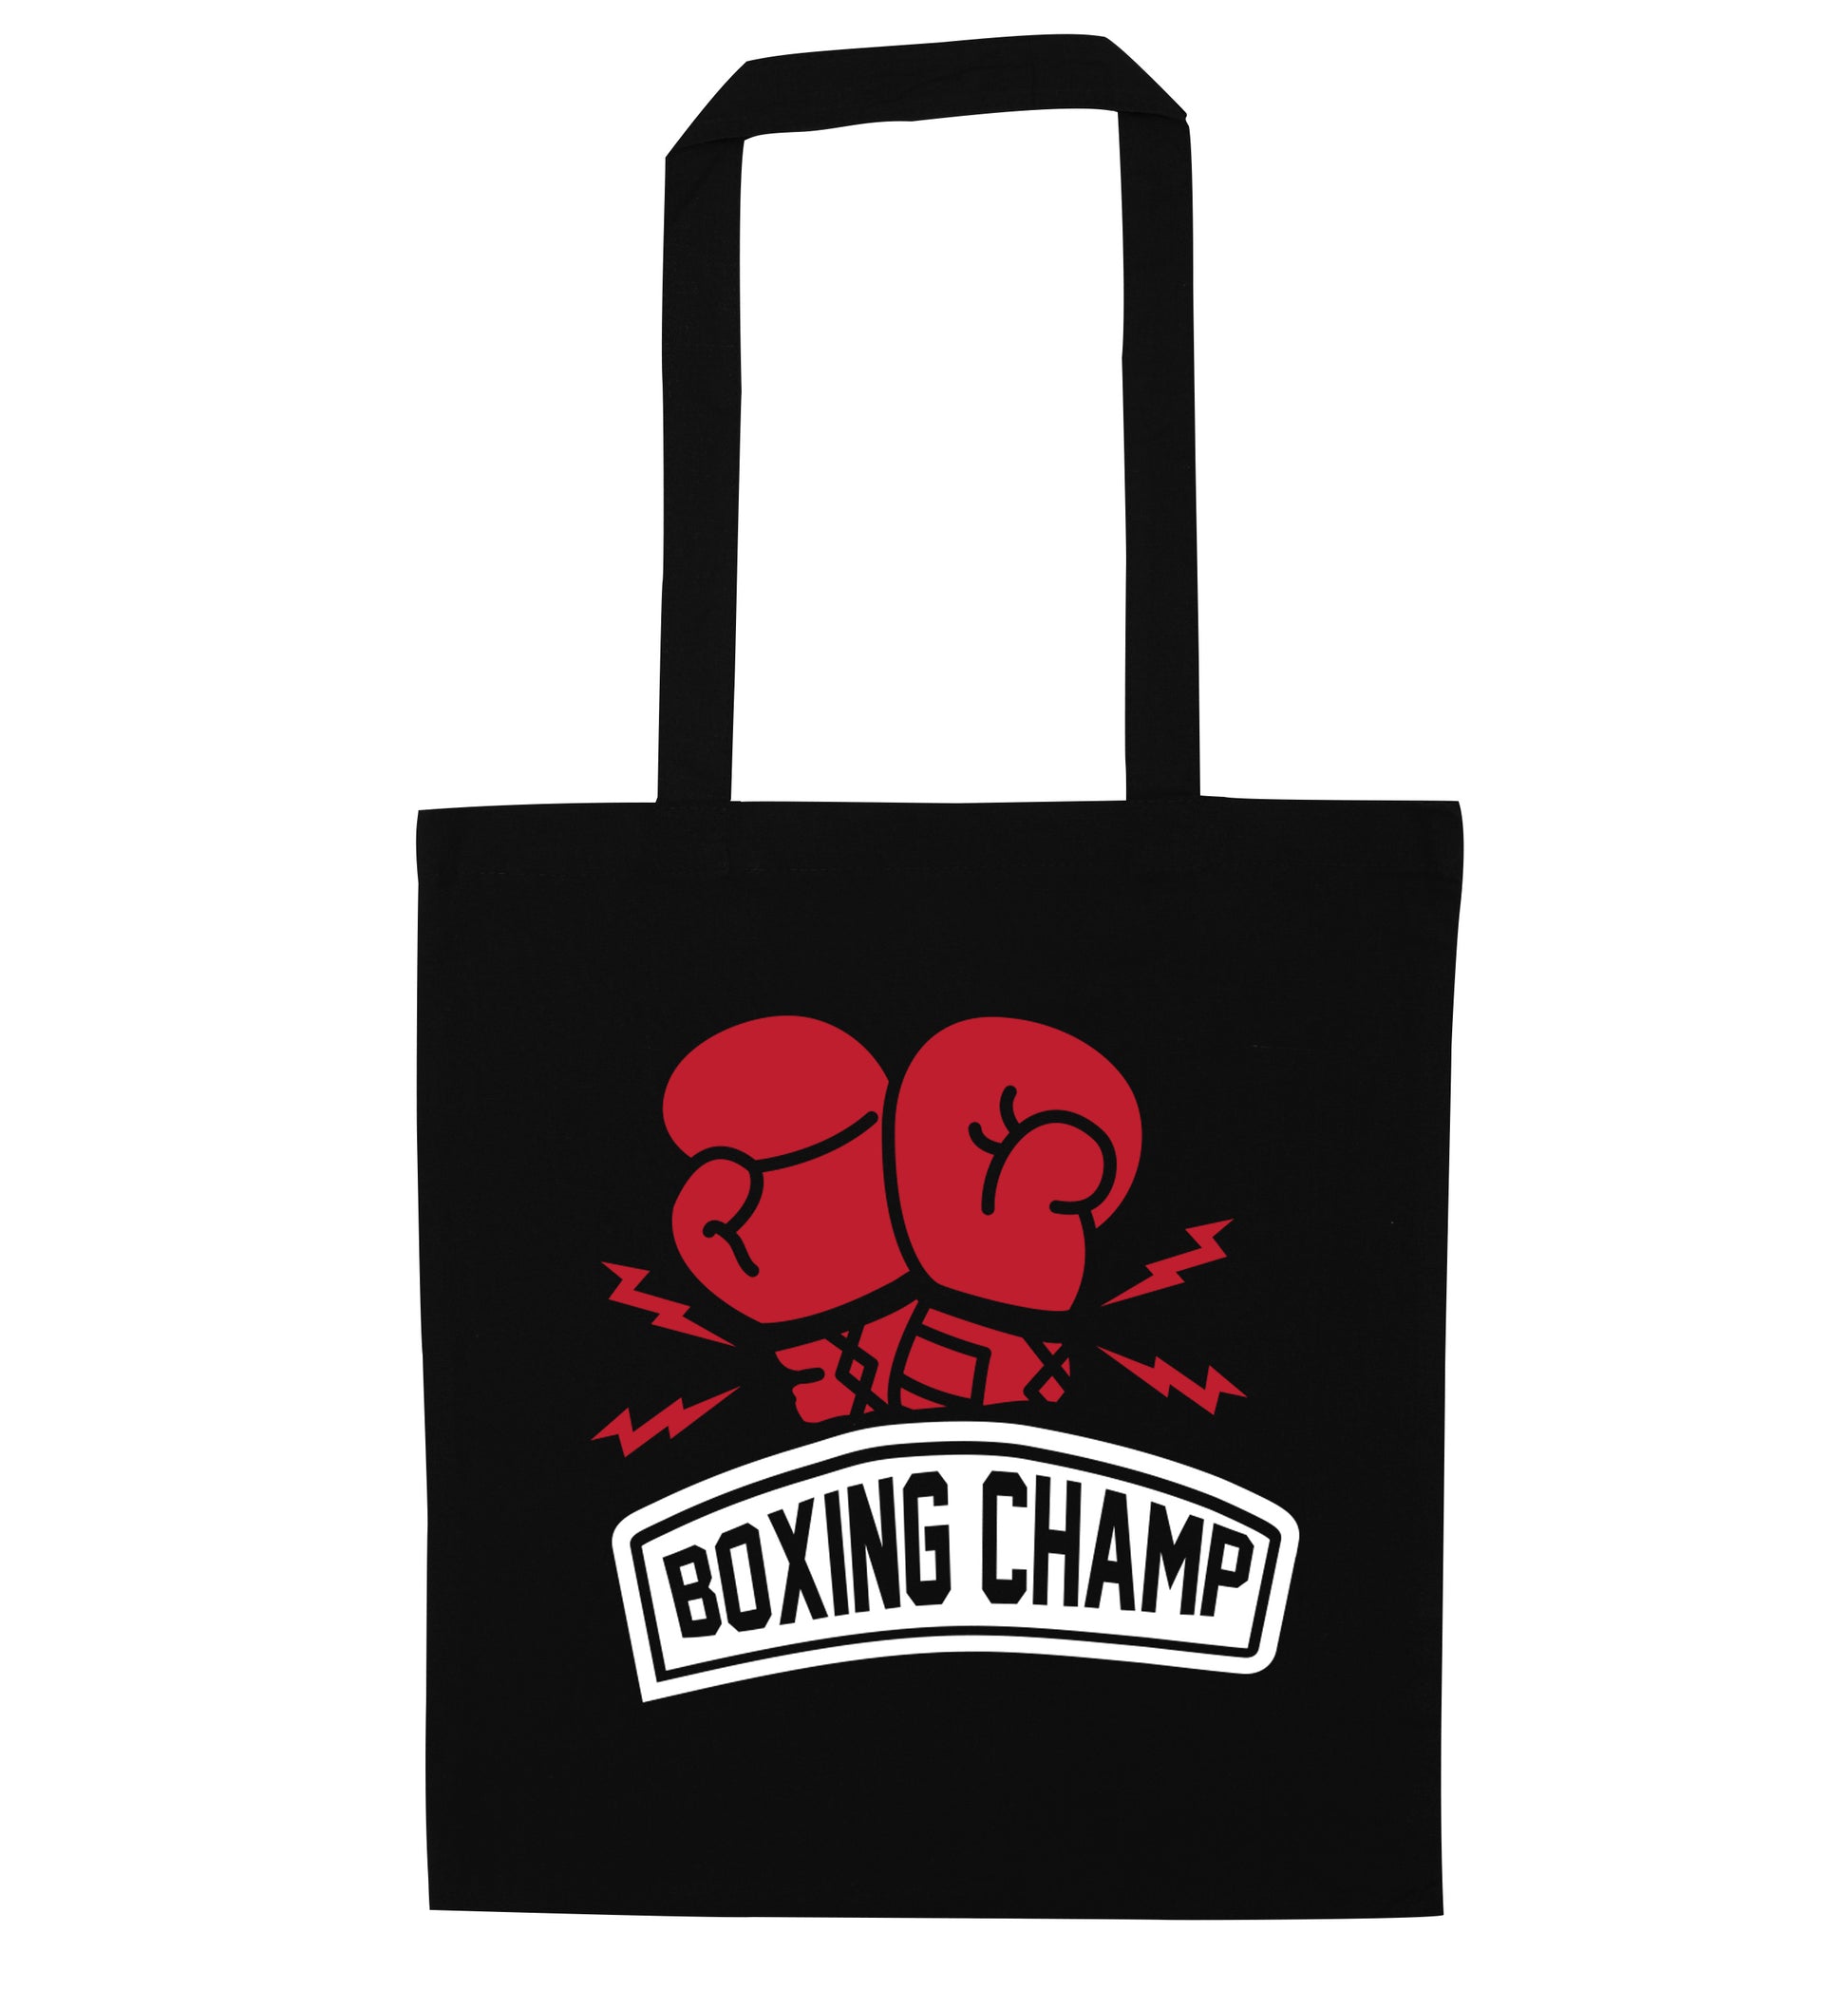 Boxing Champ black tote bag